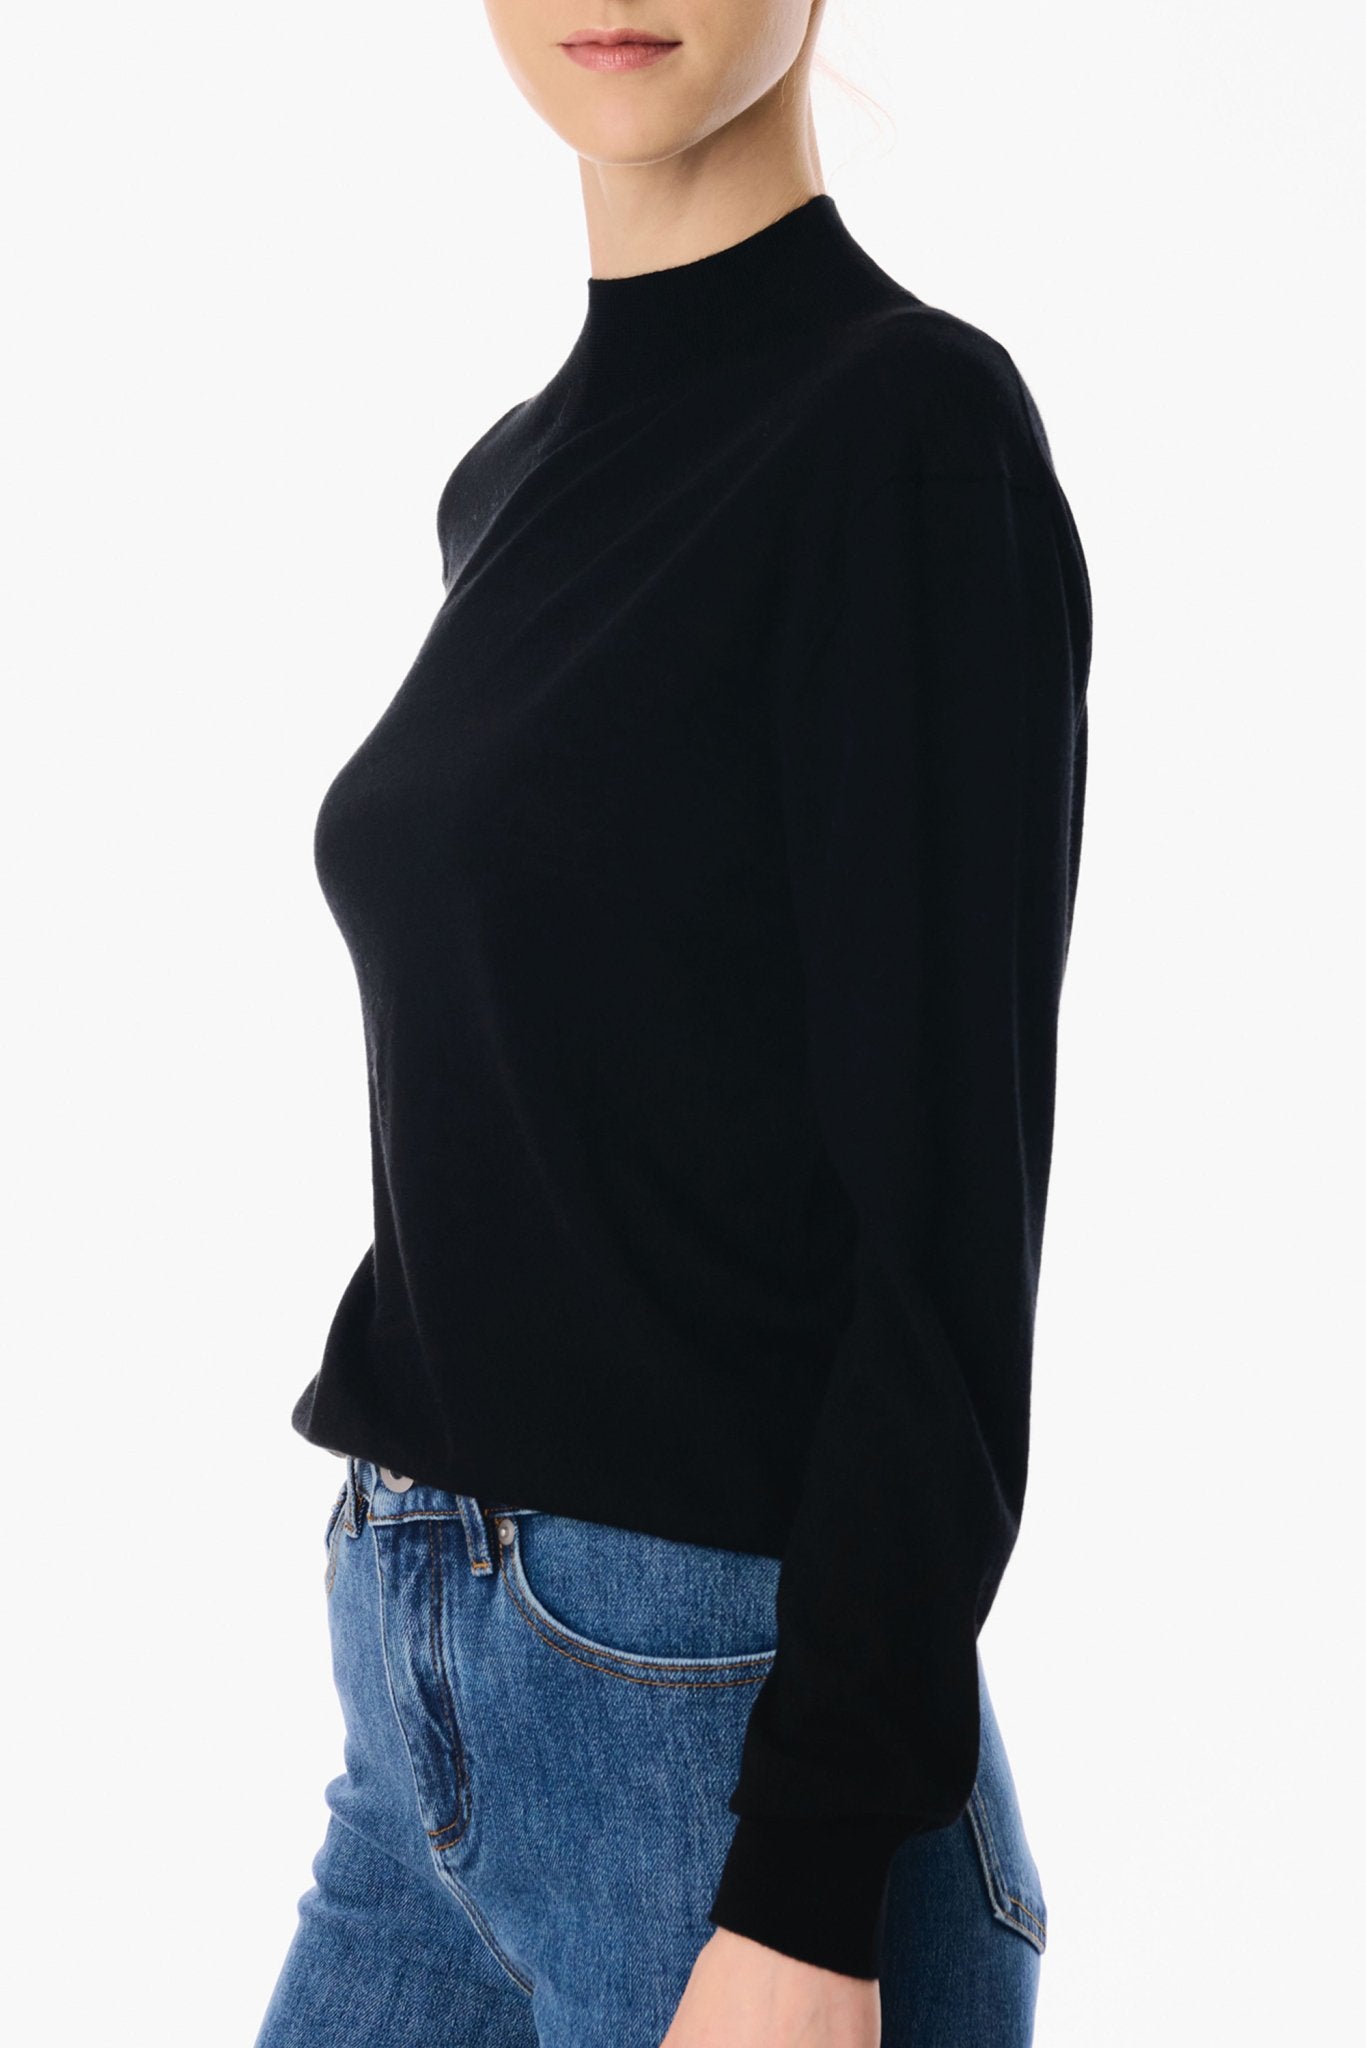 DRU wool sweater (Black) - STELLAM